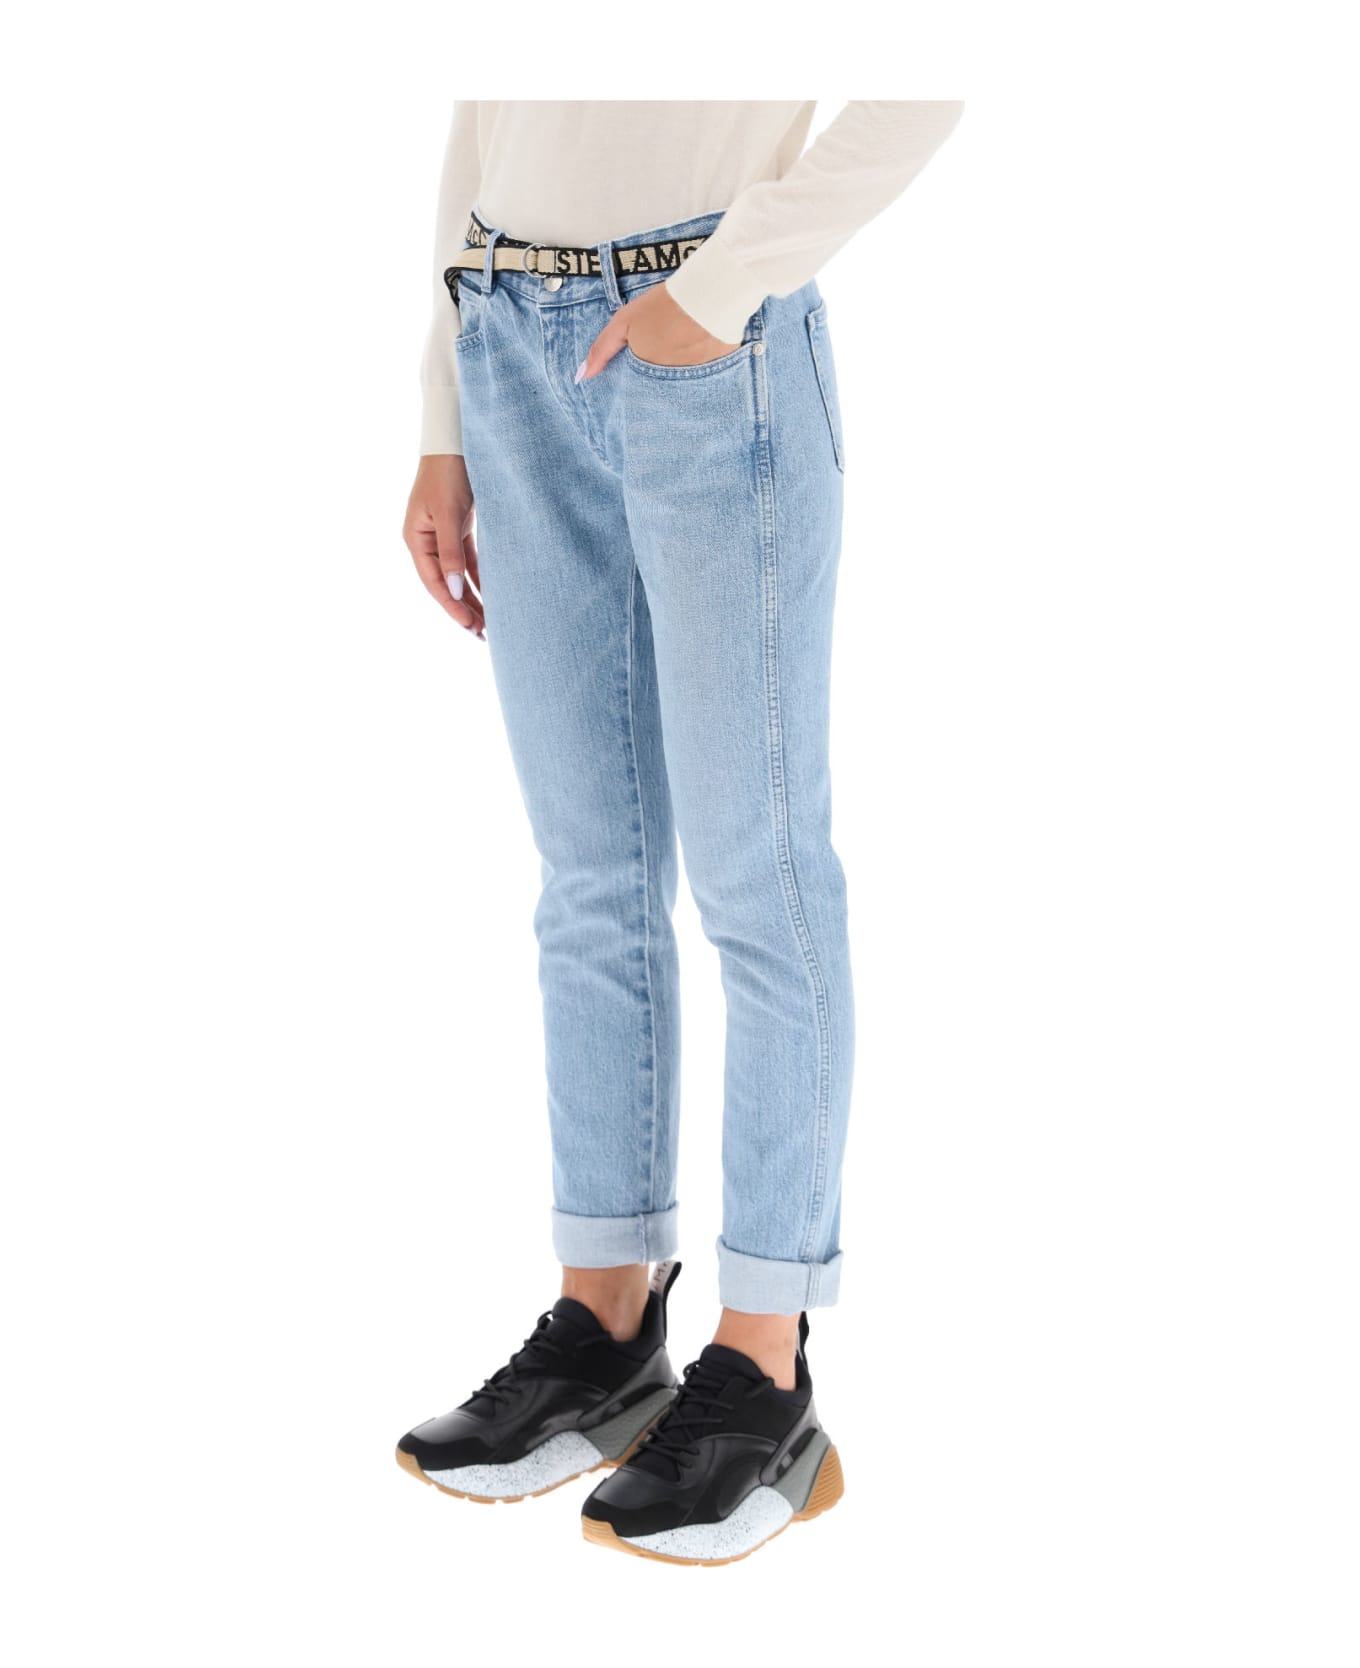 Stella McCartney Belted Skinny Jeans - Azzurro デニム